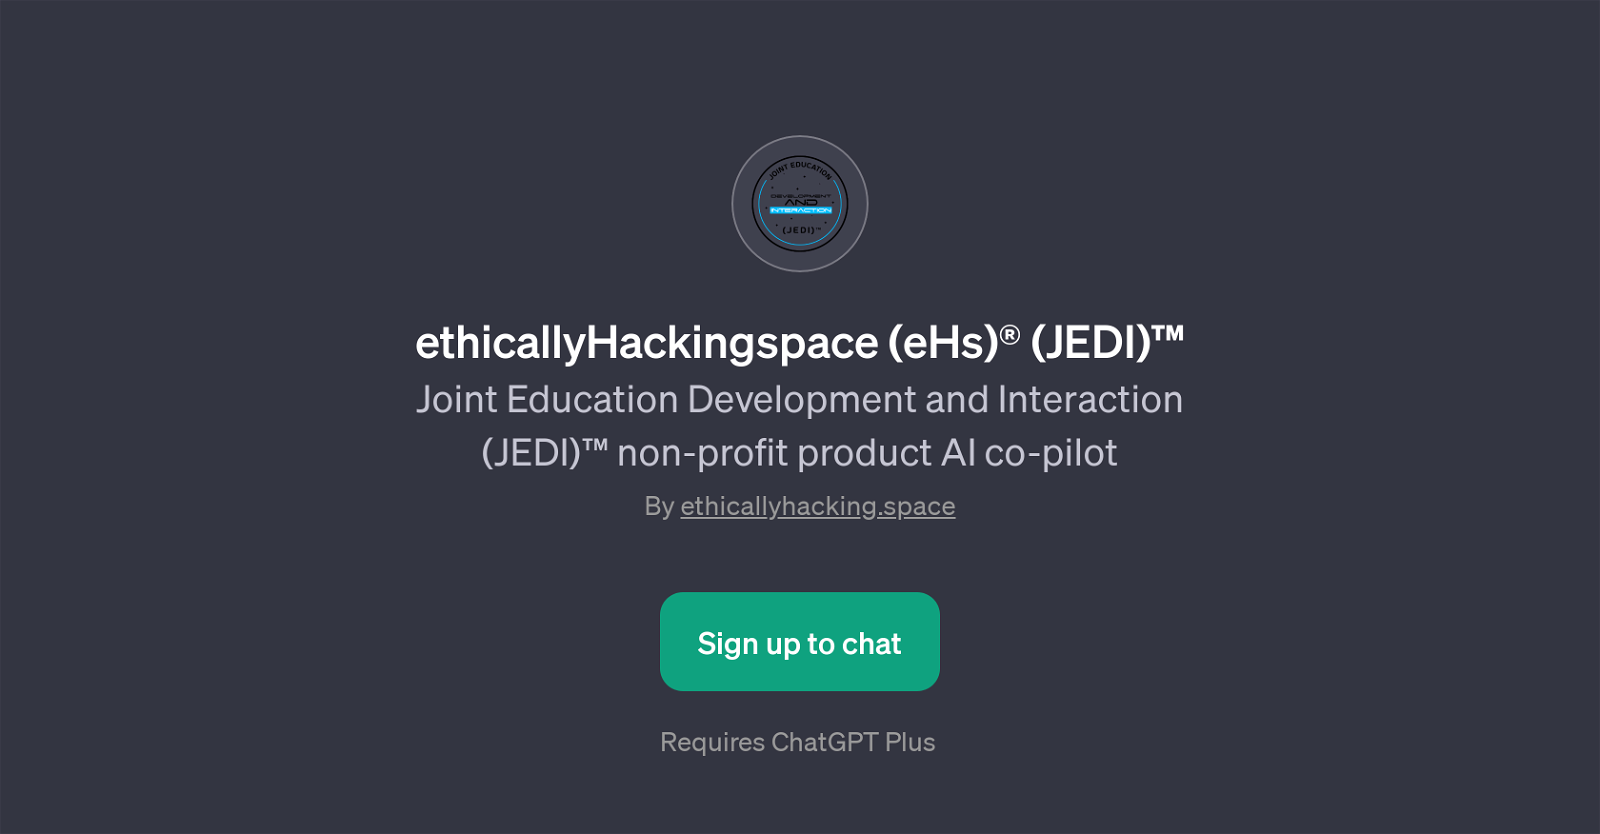 ethicallyHackingspace (eHs) (JEDI) website